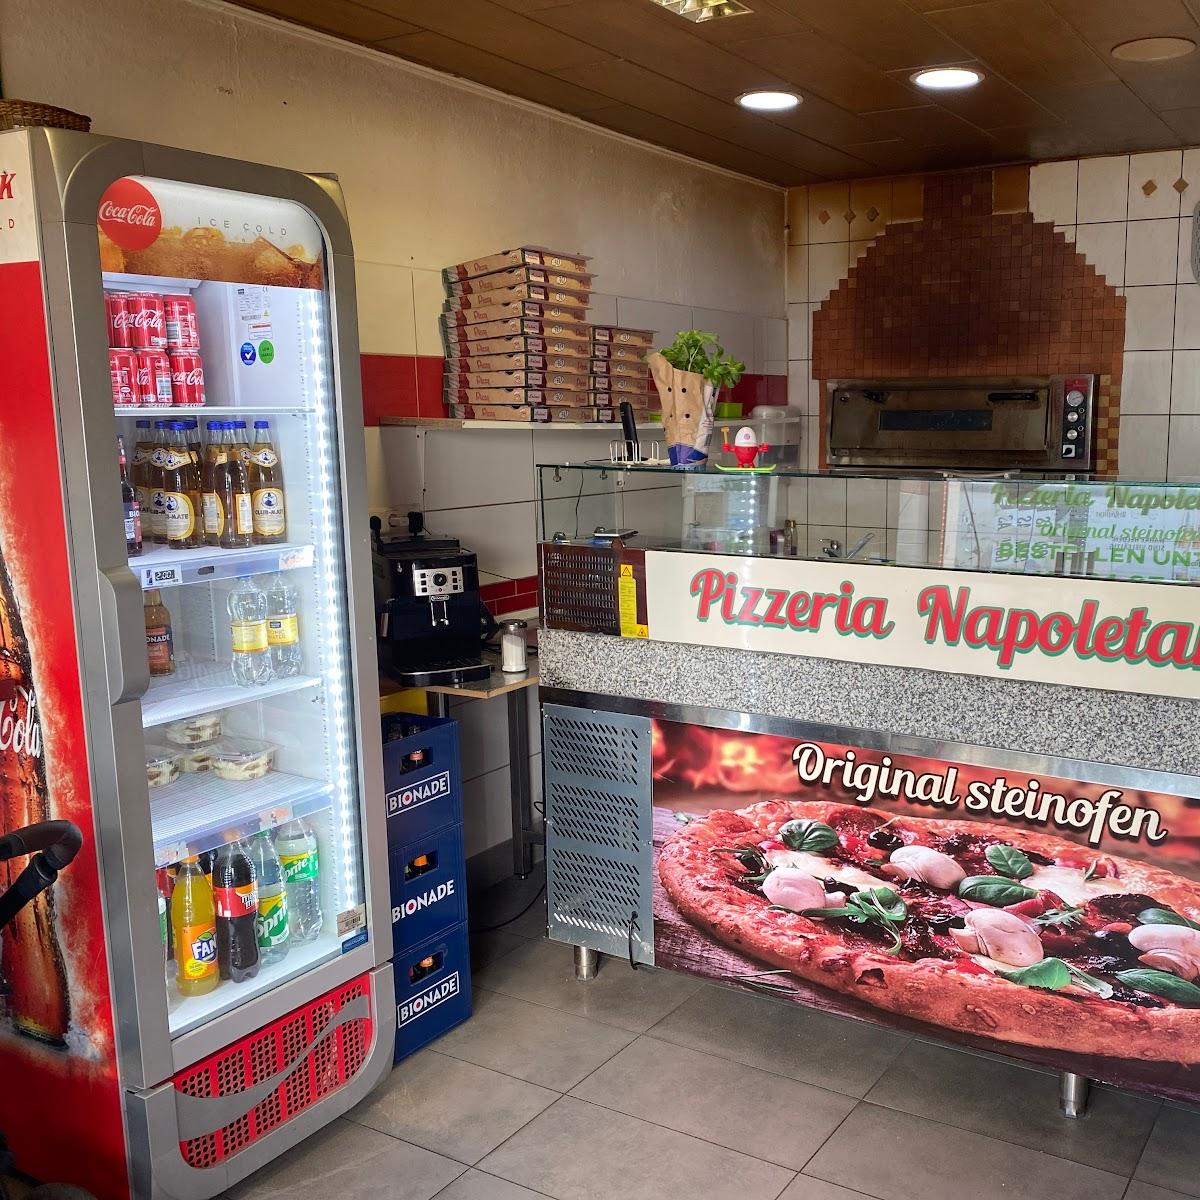 Restaurant "Pizzeria Napoletana" in Leipzig